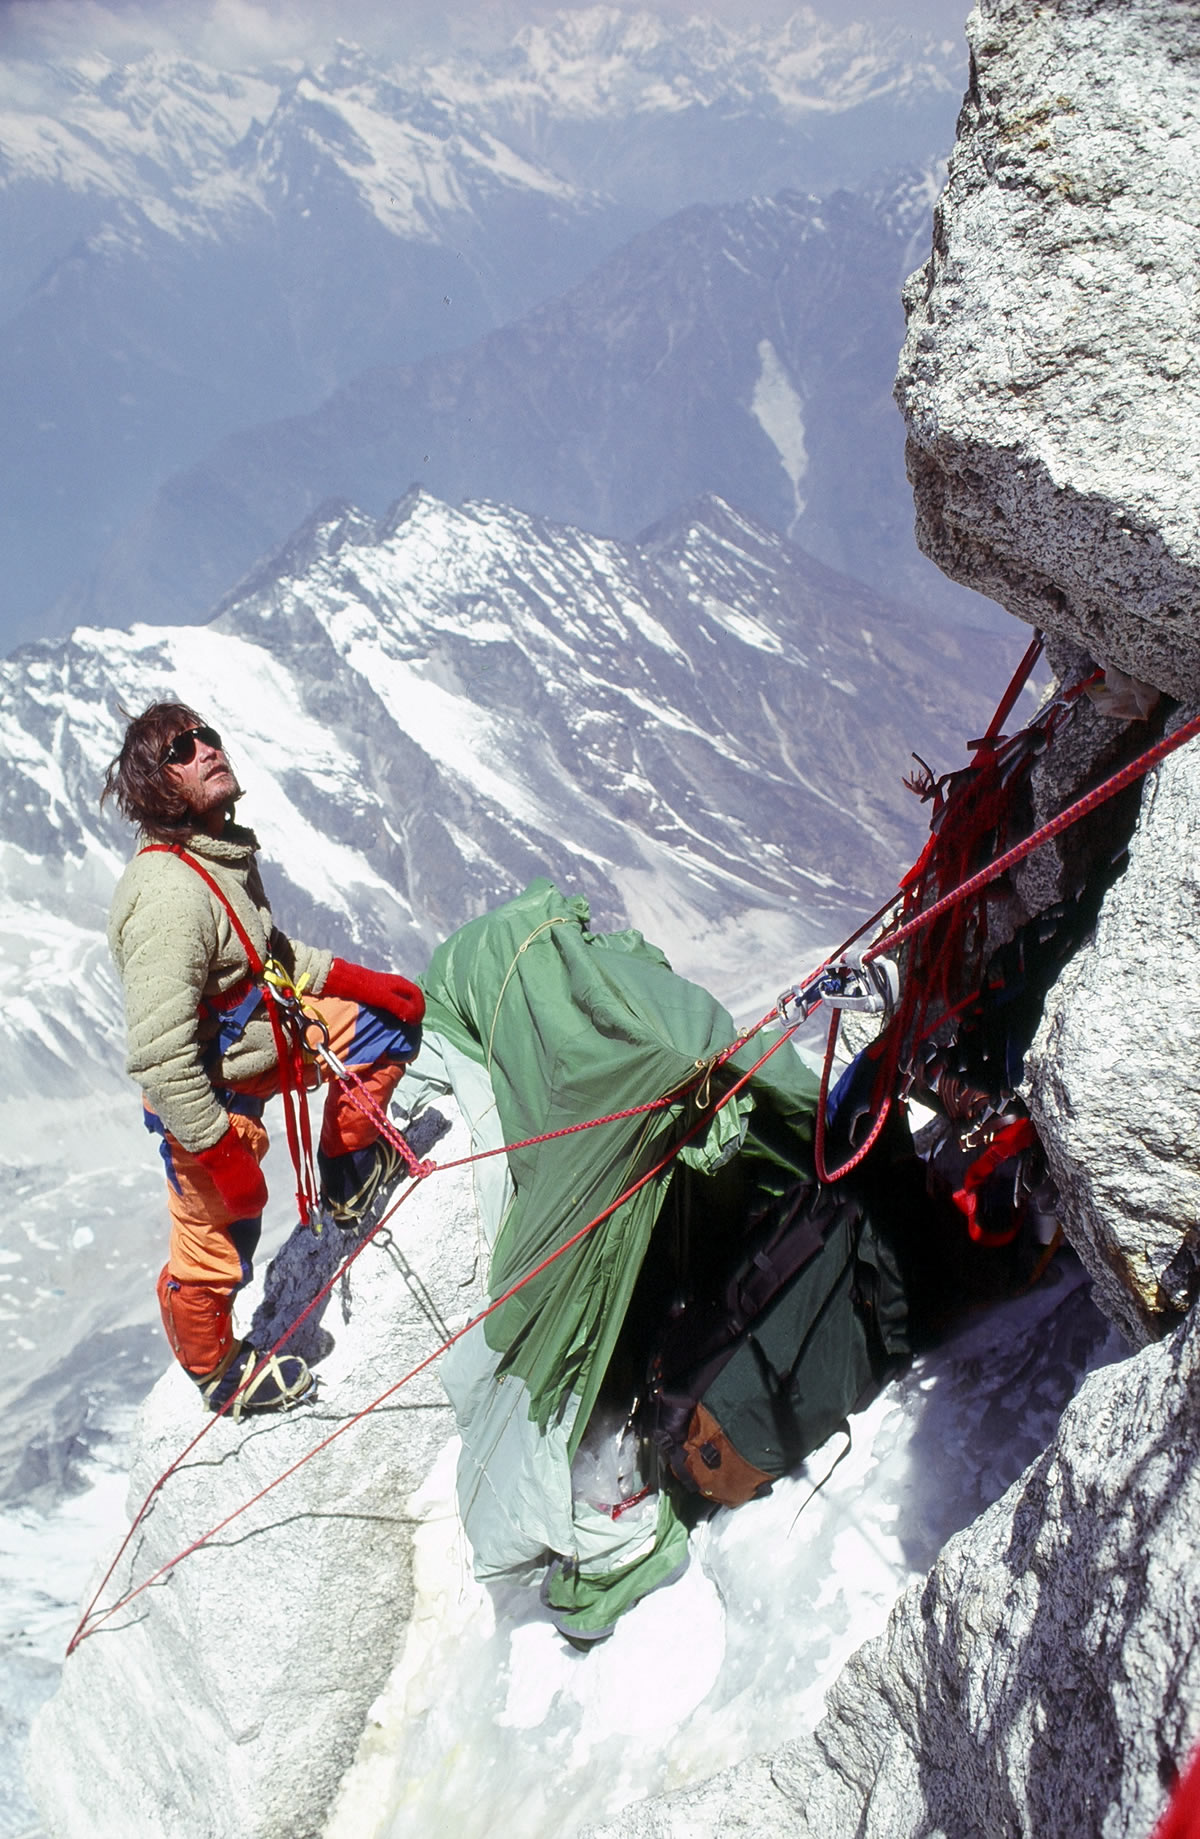 Kim Schmitz at the high camp on the first ascent of Gaurishankar (7181m), Nepal, 1979. [Photo] John Roskelley